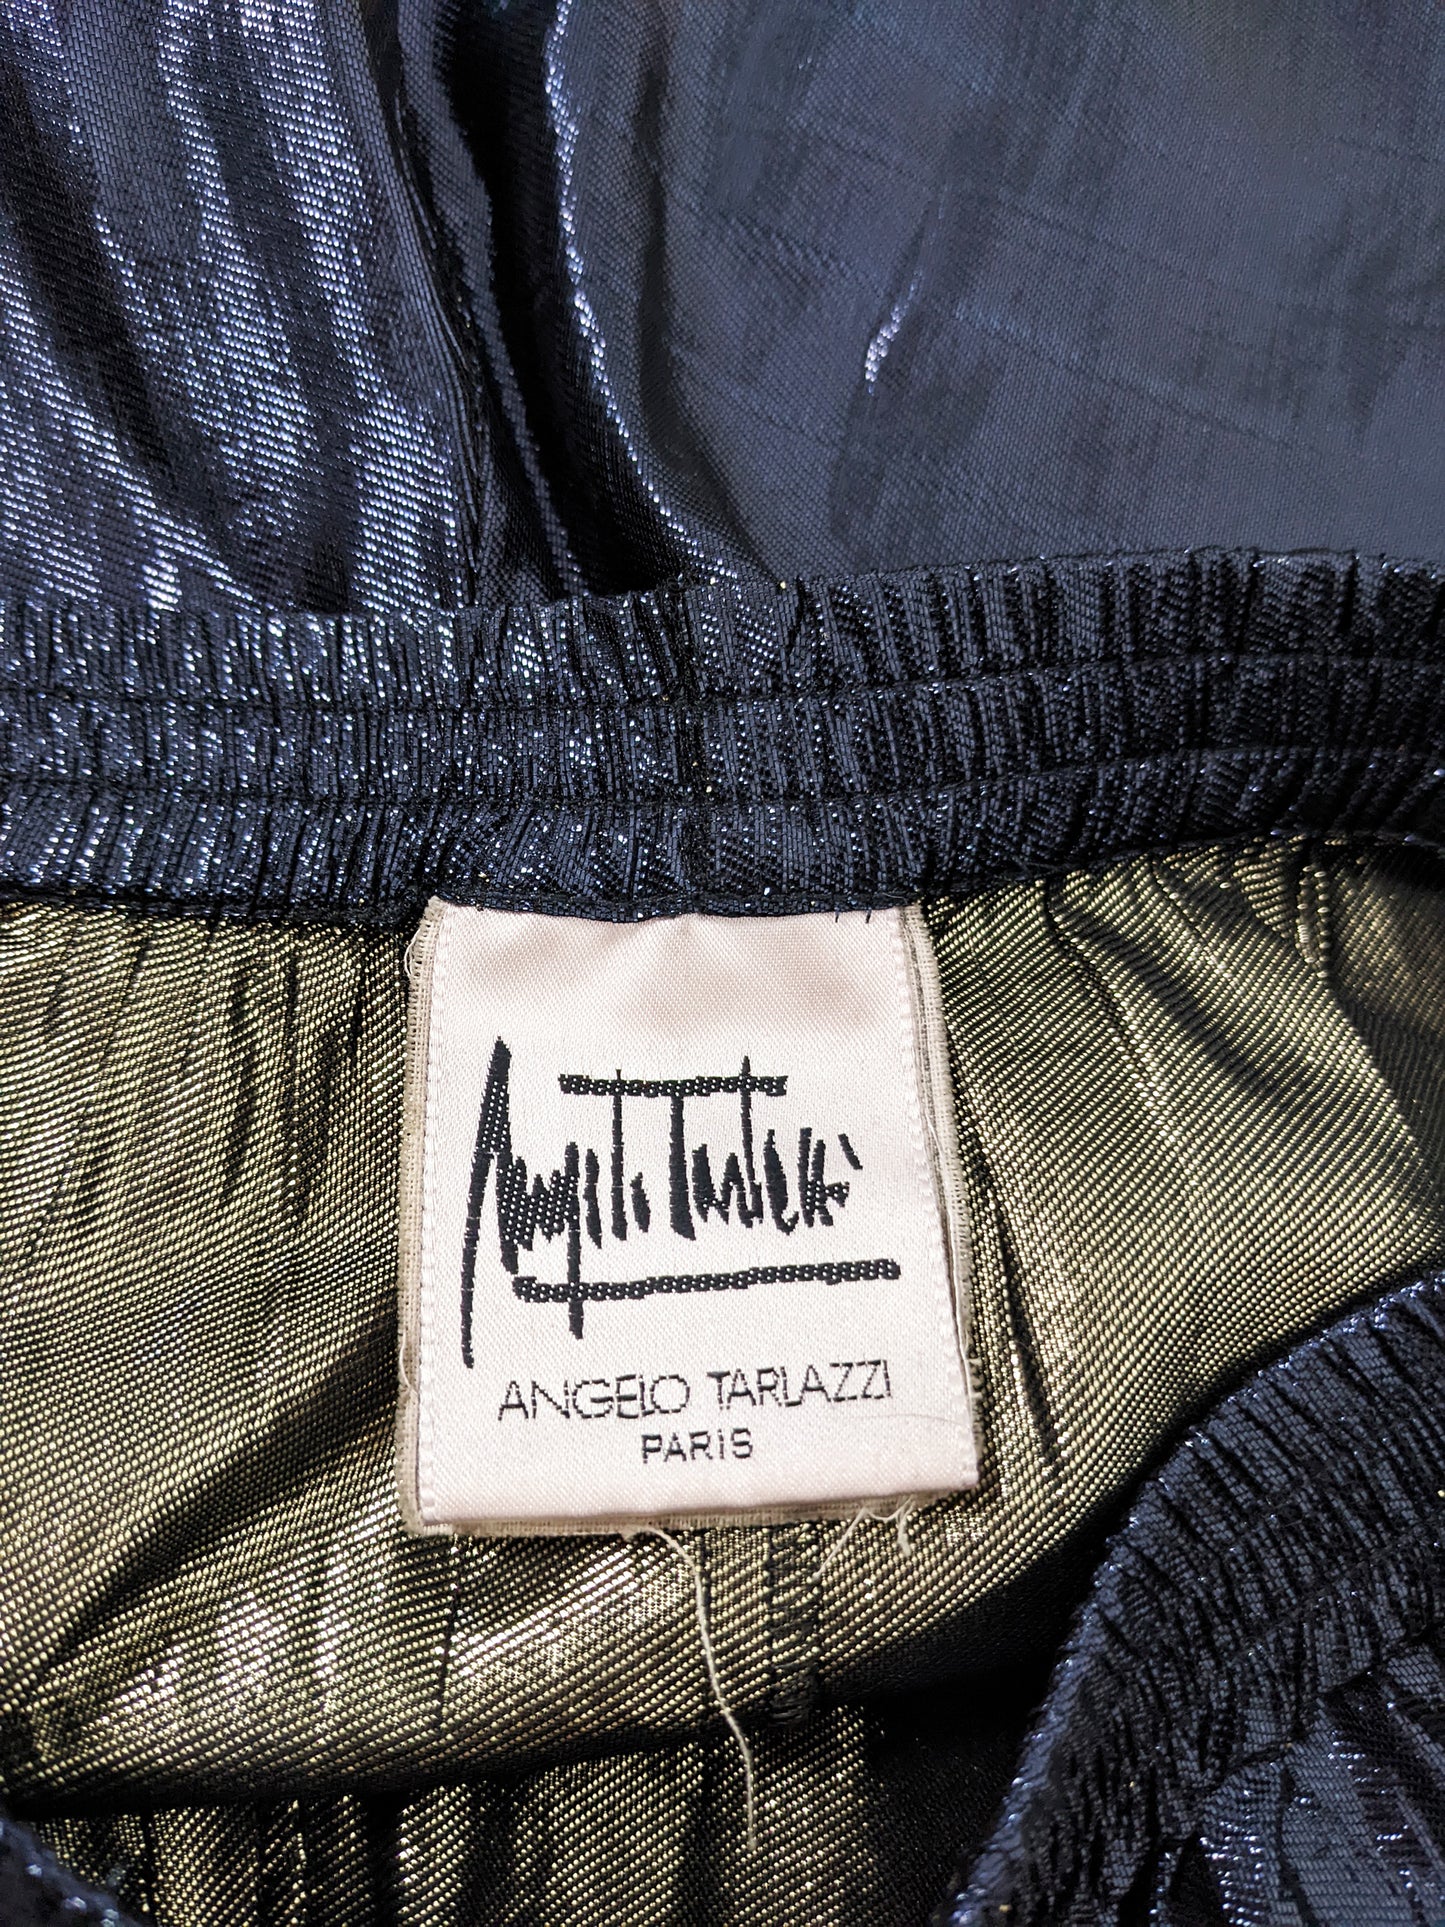 Angelo Tarlazzi Midnight Blue Metallic Silk Lamé Trousers, 1980s